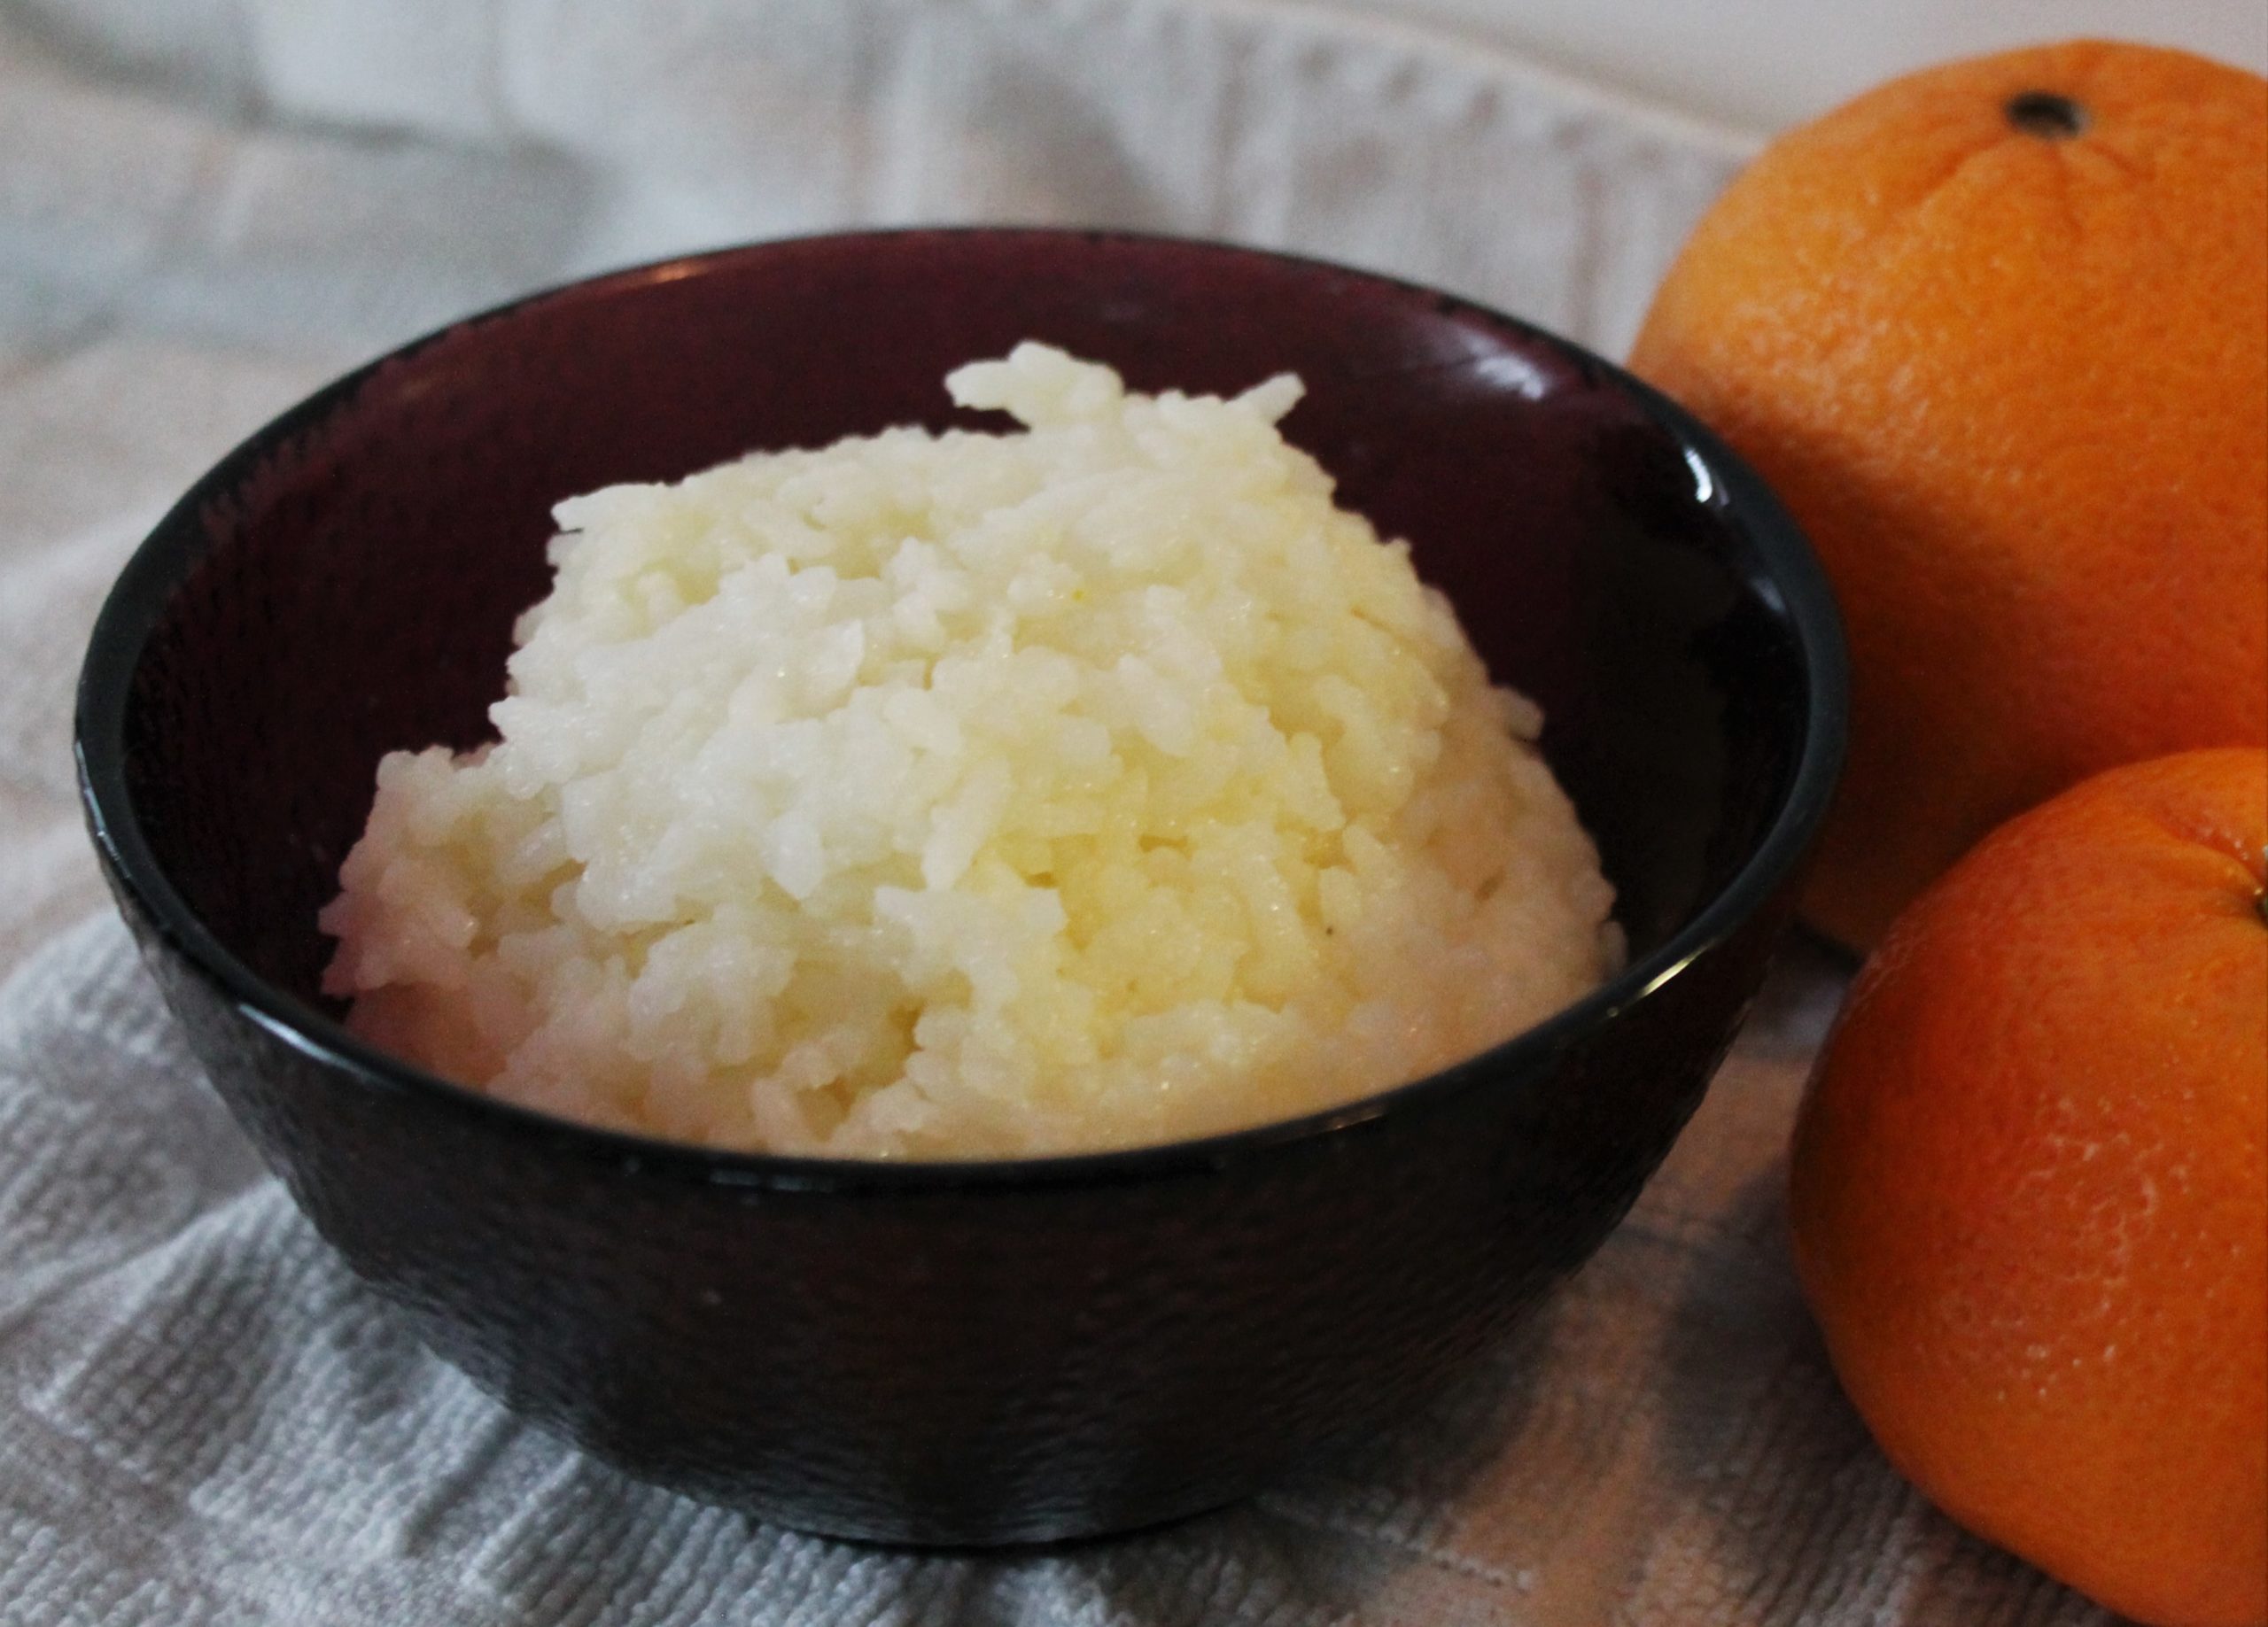 bowl of orange rice next to two oranges